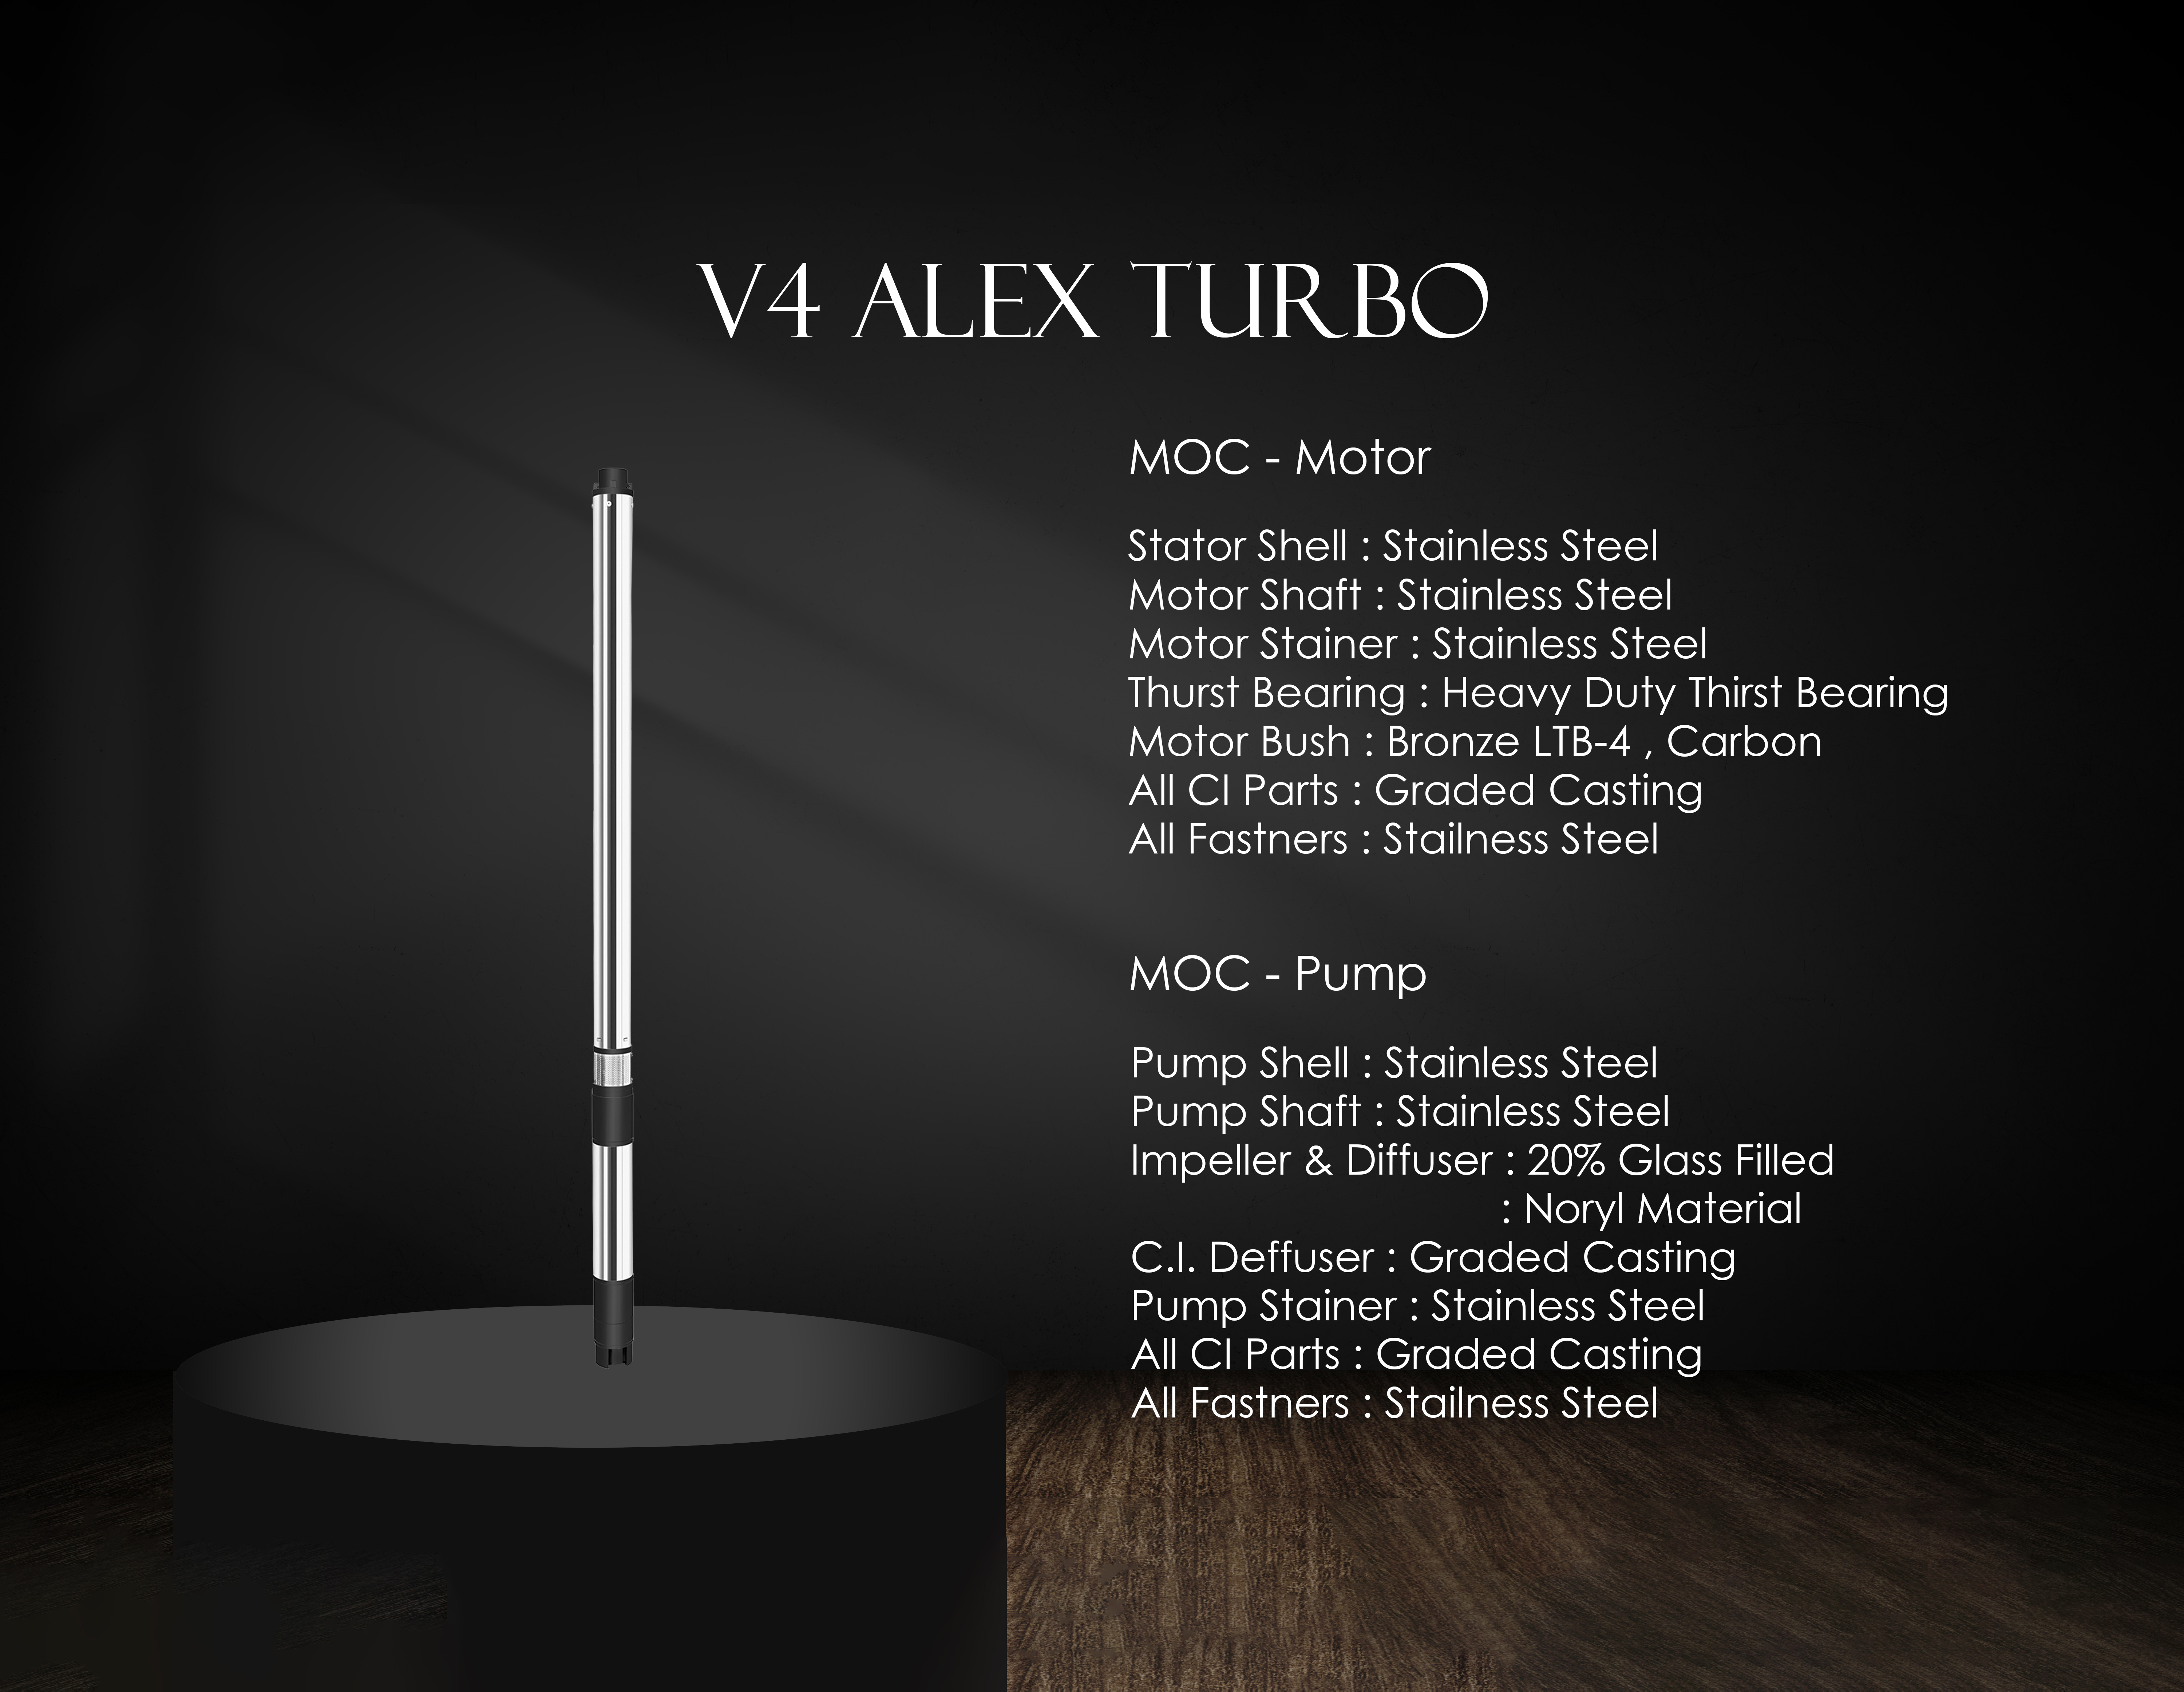 V4 3.0 HP X 35 STG Alex Turbo (Out-1.25") (S/T) Prithvi